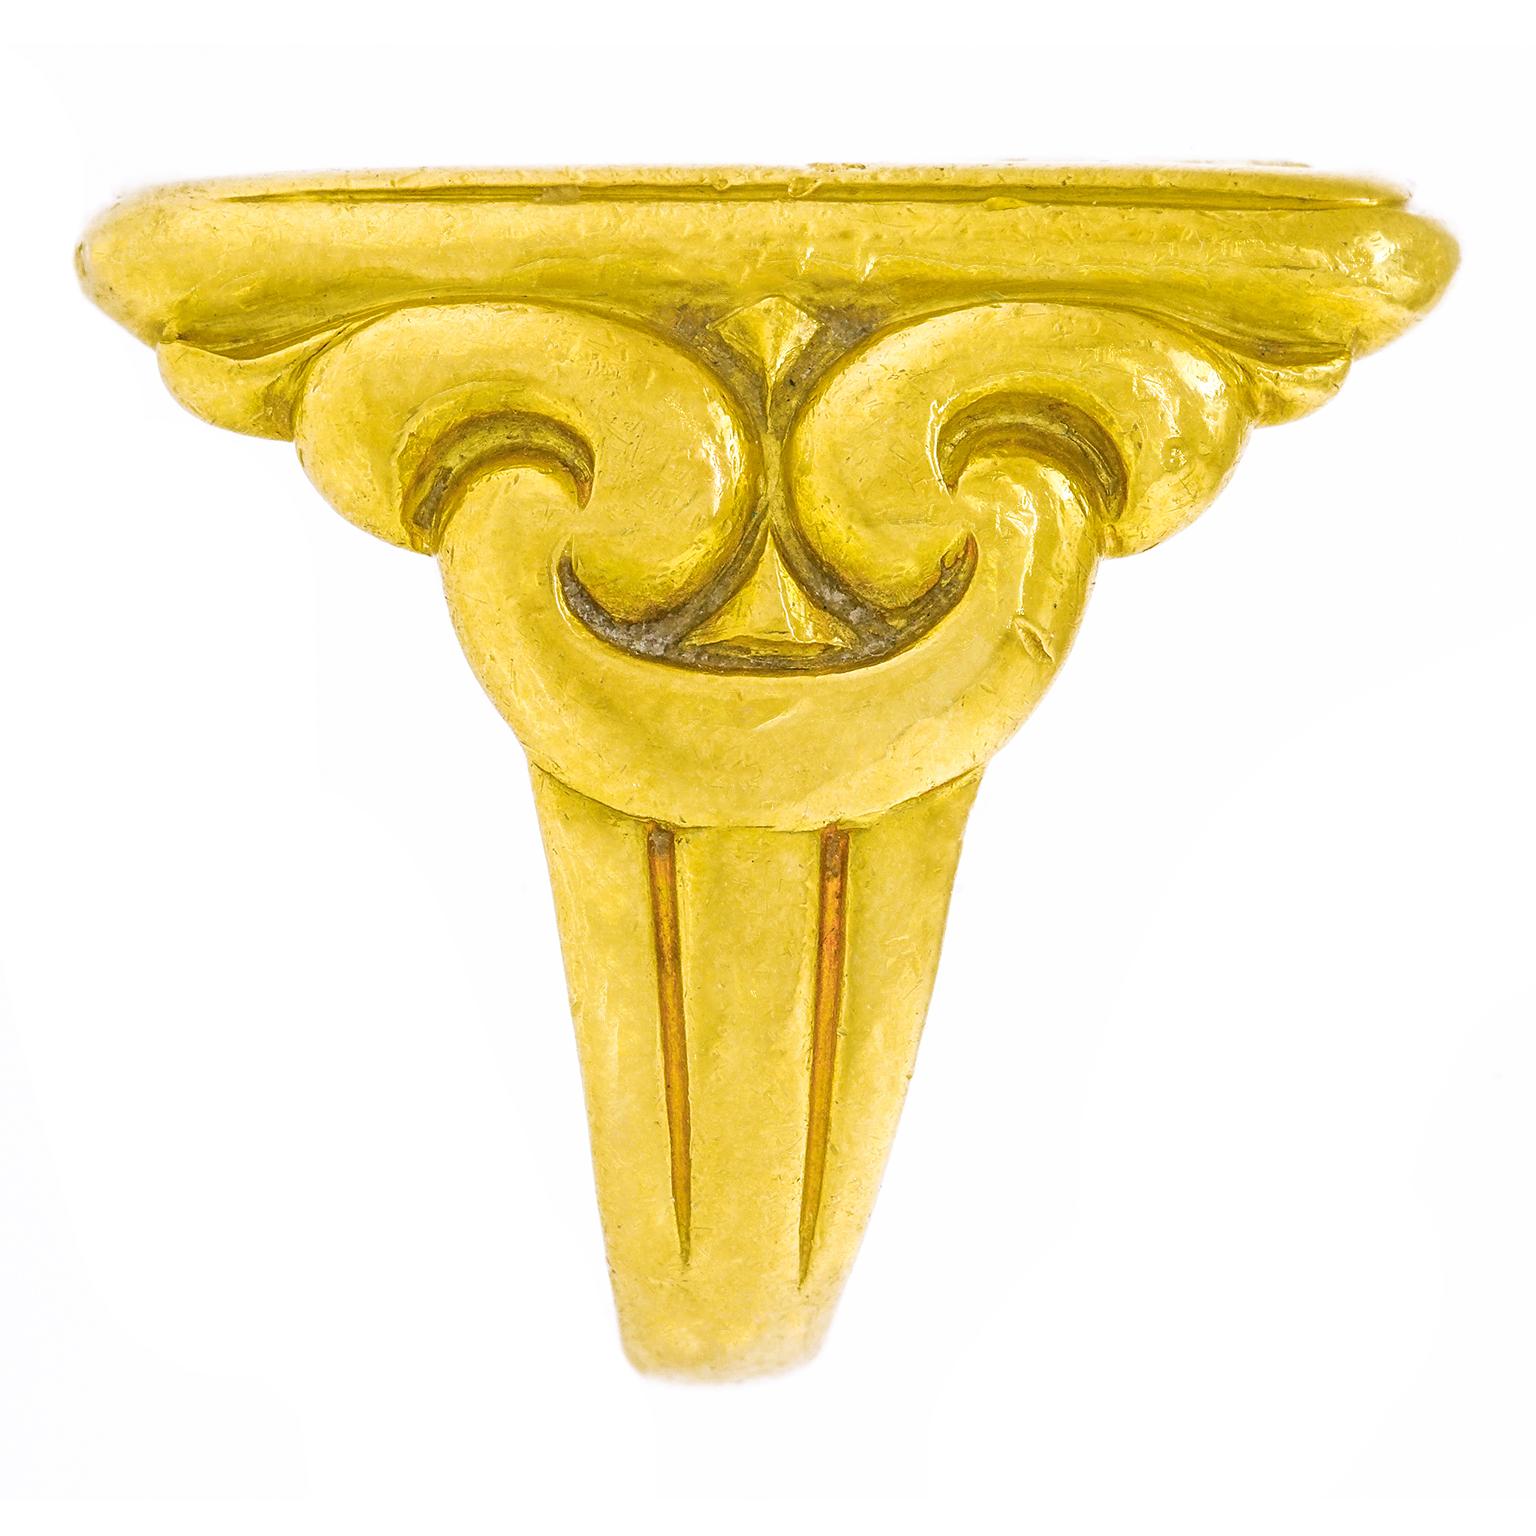 Women's or Men's Massive Renaissance Revival Signet Ring by Ponti Gennari, 1930s, Genève